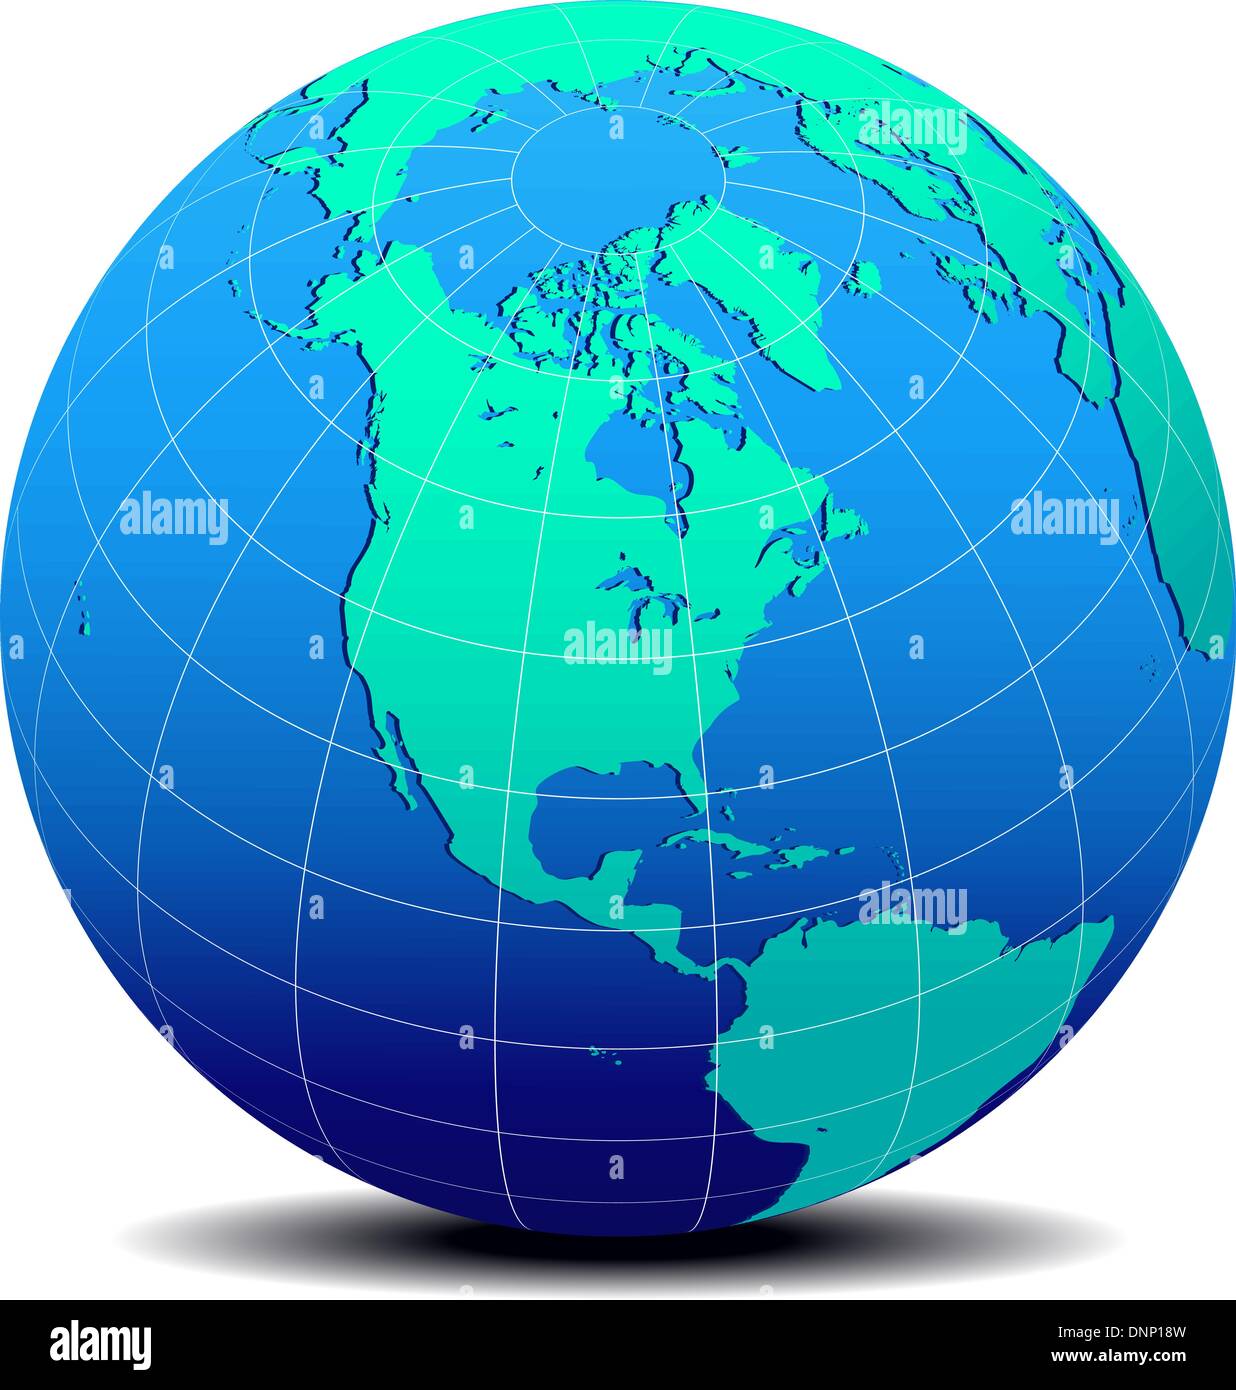 Vektor-Kartensymbol der Welt in Globe-Form - Nordamerika Stock Vektor